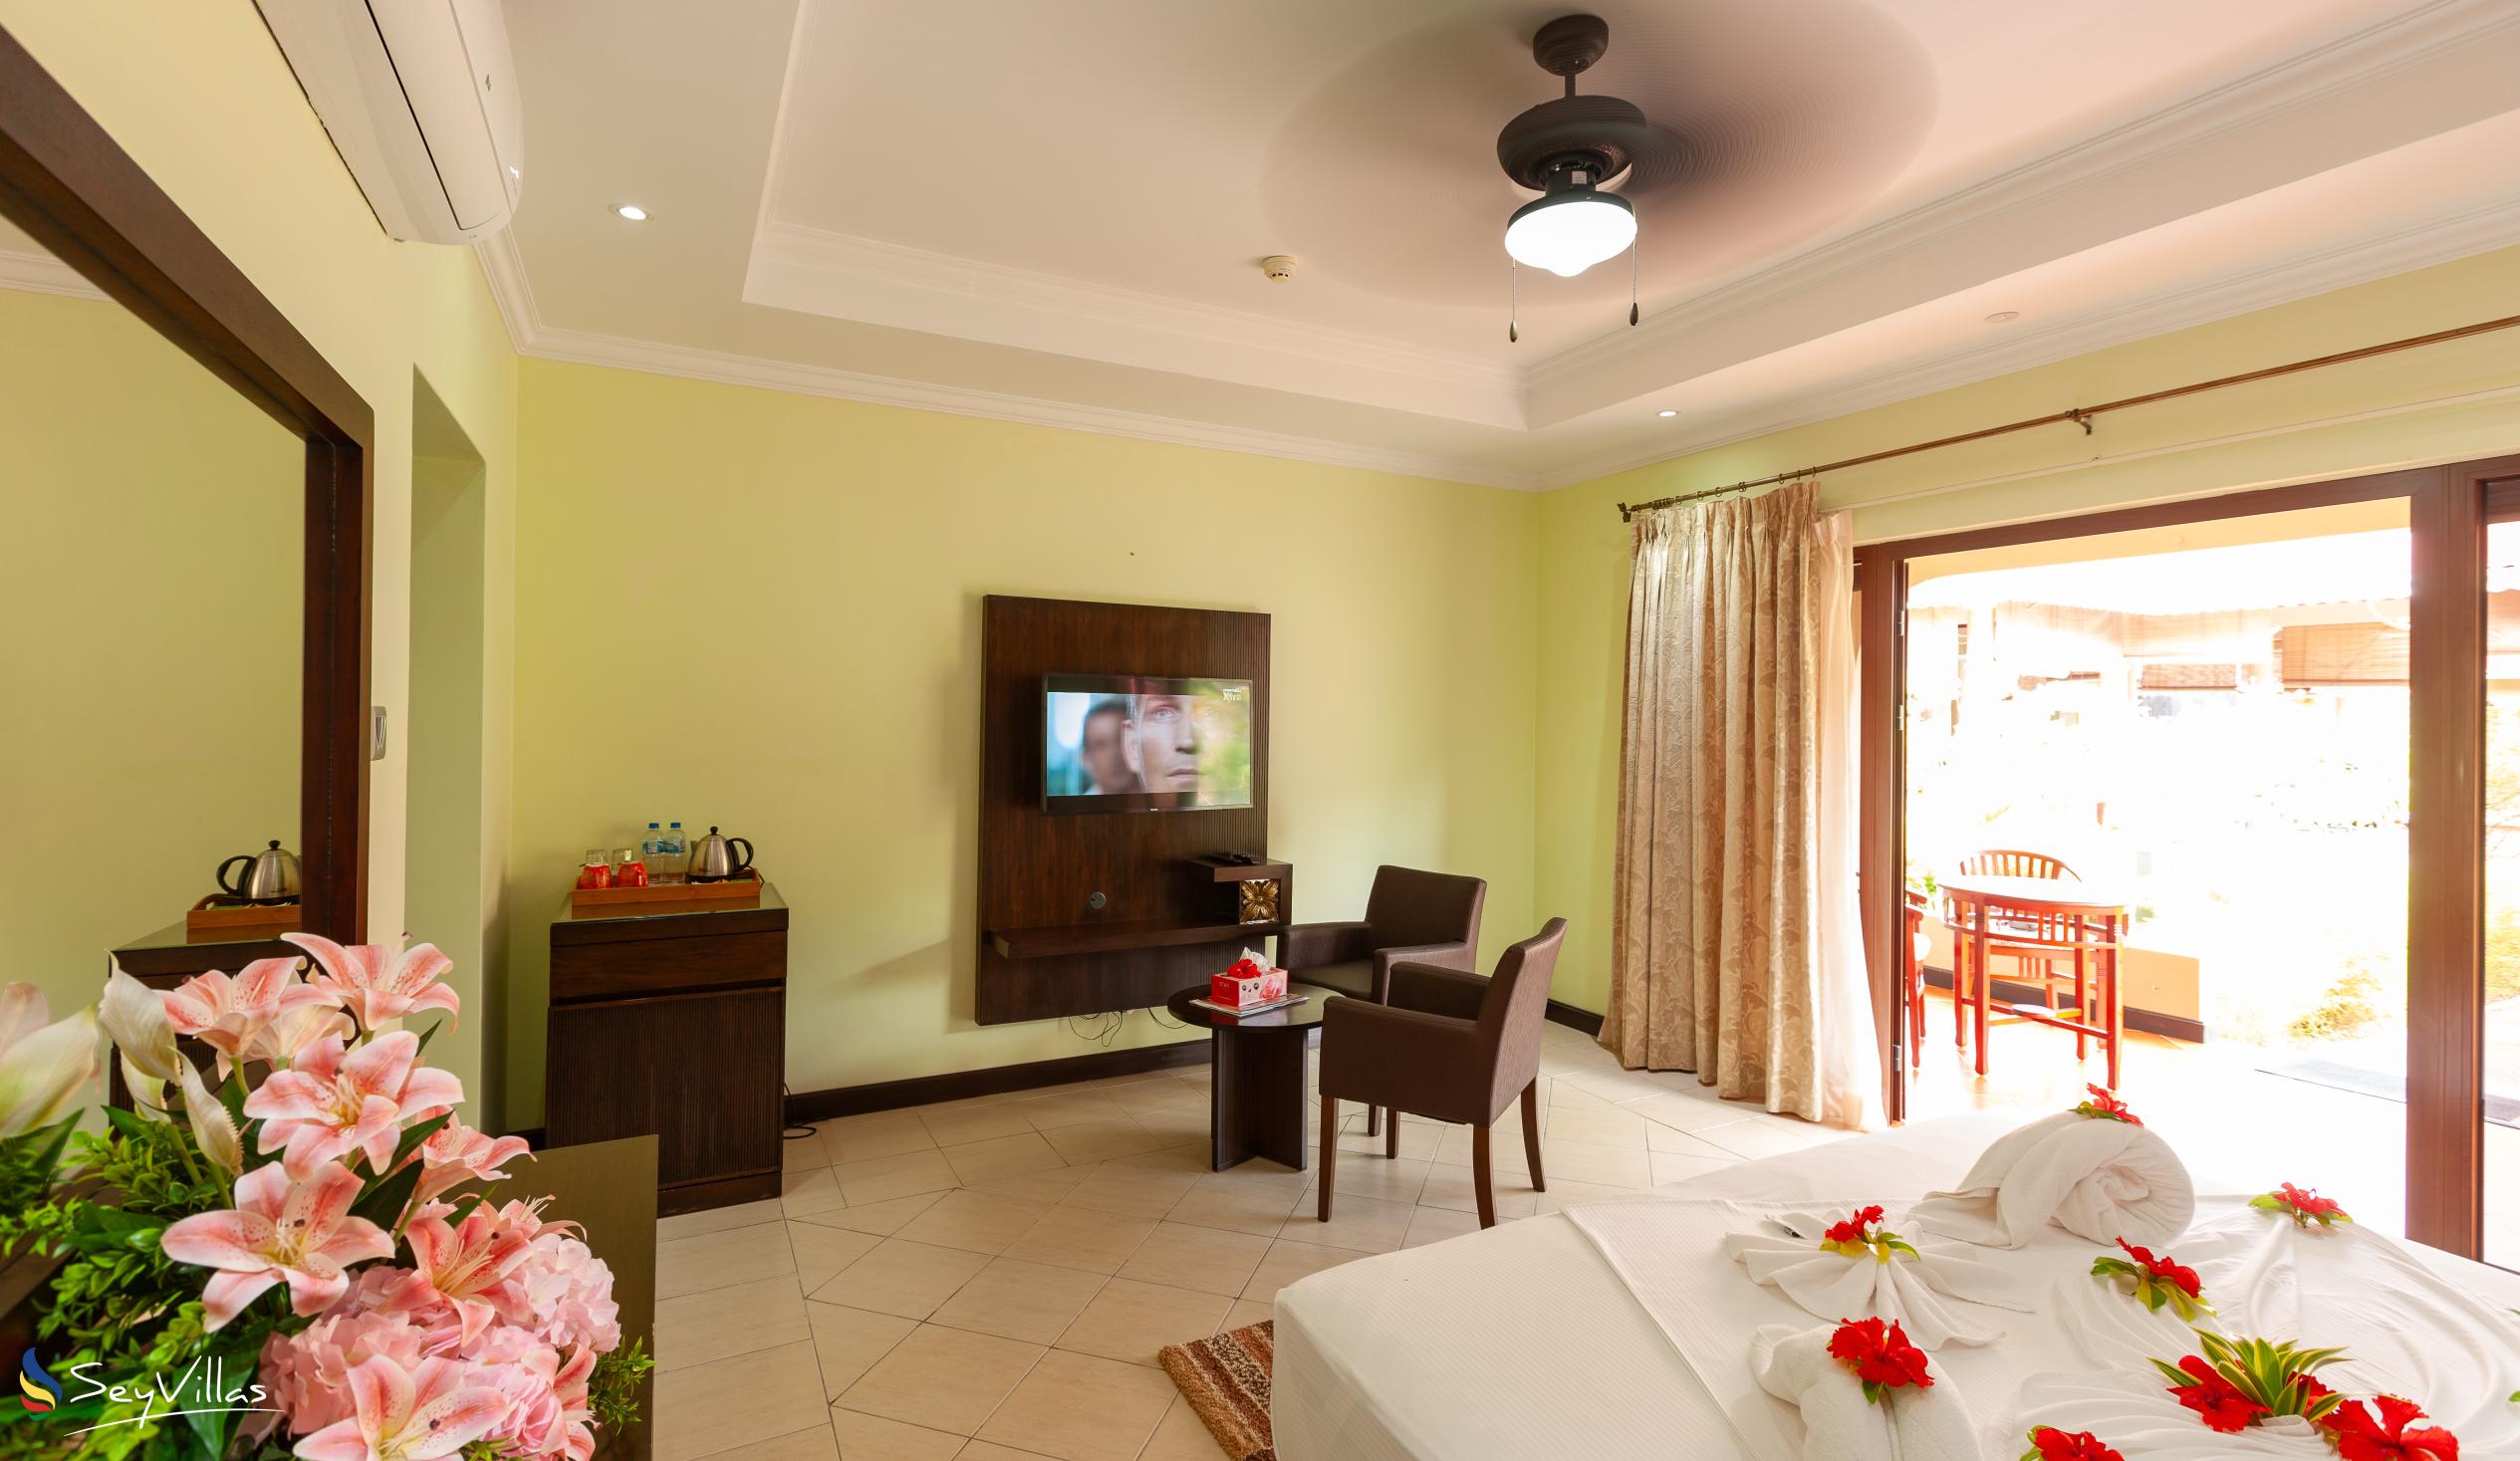 Photo 38: Oasis Hotel, Restaurant & Spa - Standard Room - Praslin (Seychelles)